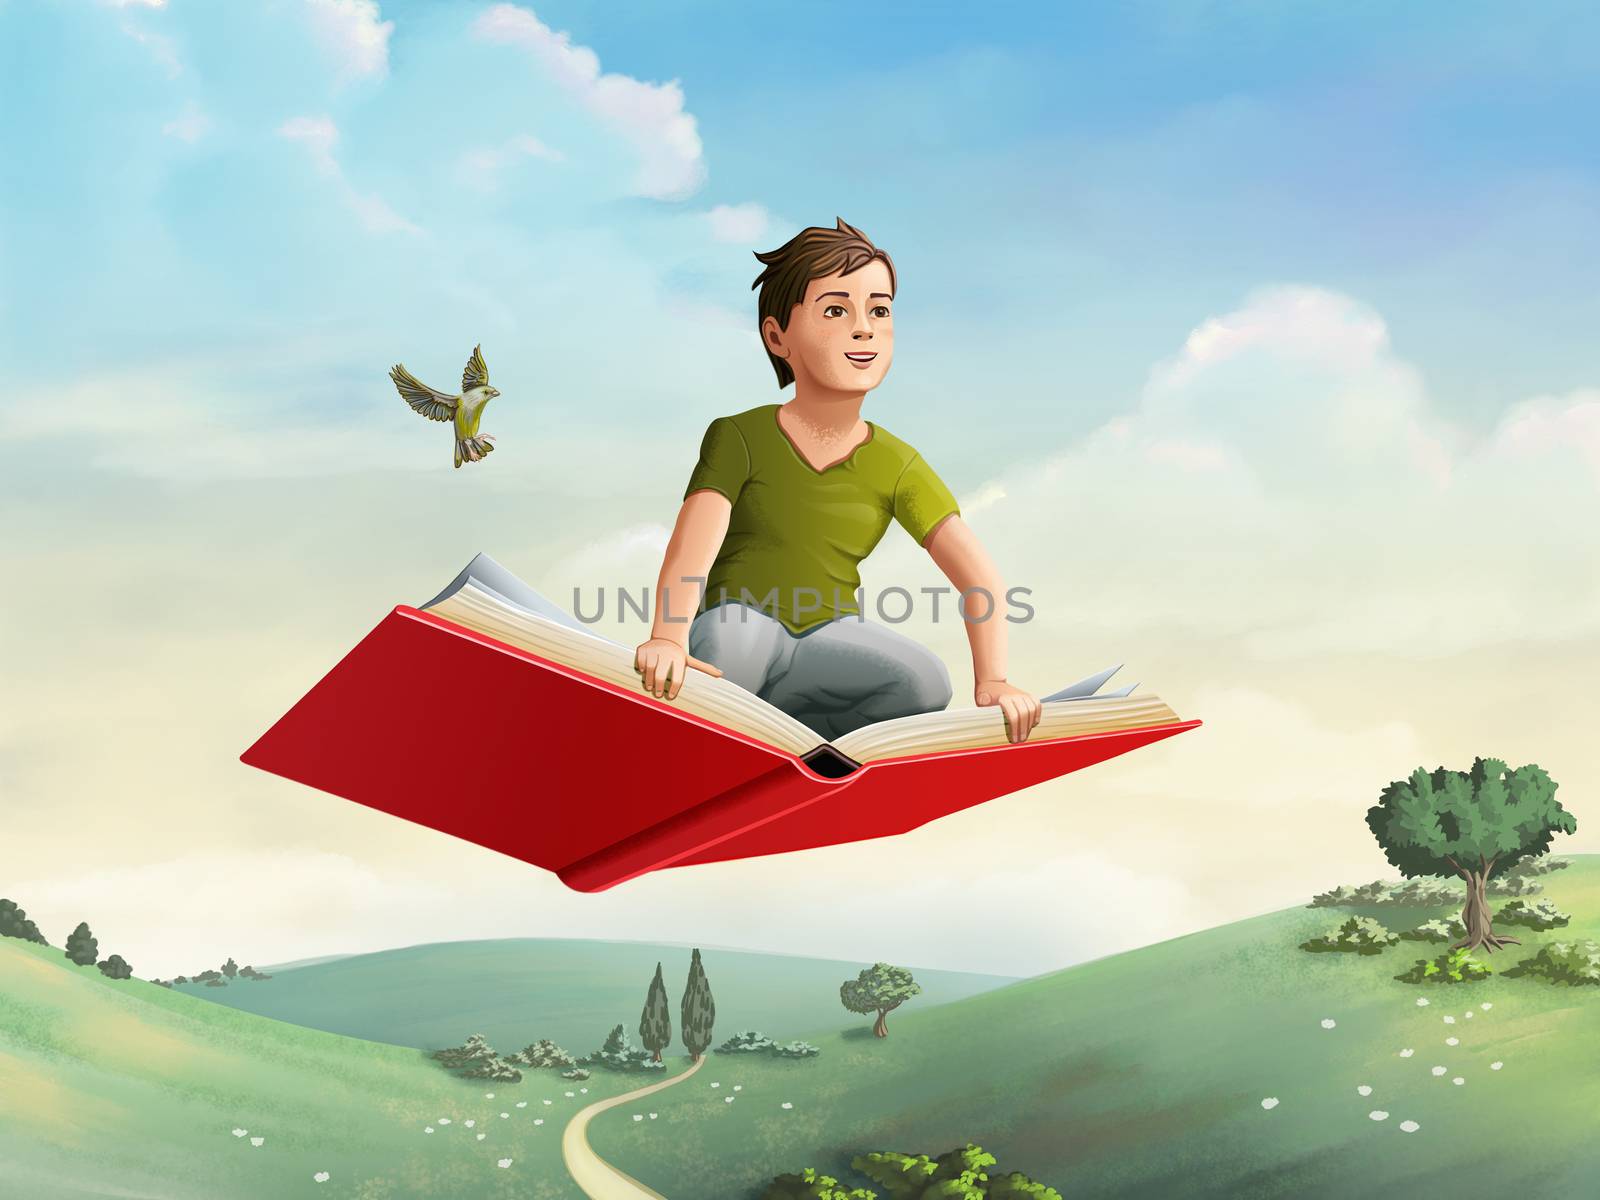 Children flying on an open book through a rural landscape. Digital illustration.